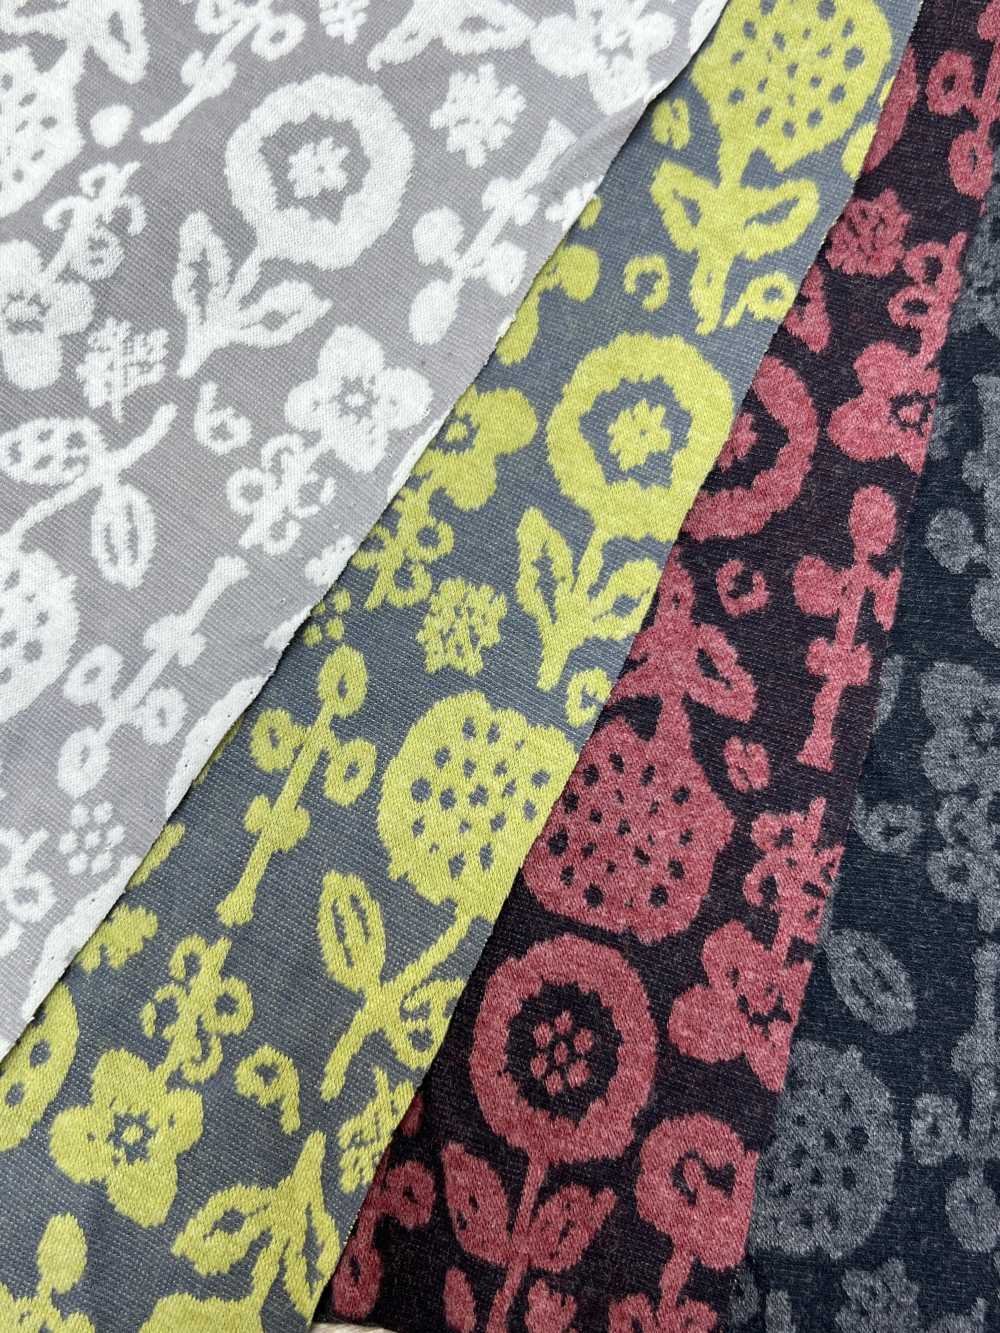 75047-B Circular Rib Fuzzy Jacquard Floral Pattern[Textile / Fabric] SAKURA  COMPANY/Okura Shoji Co., Ltd. - ApparelX